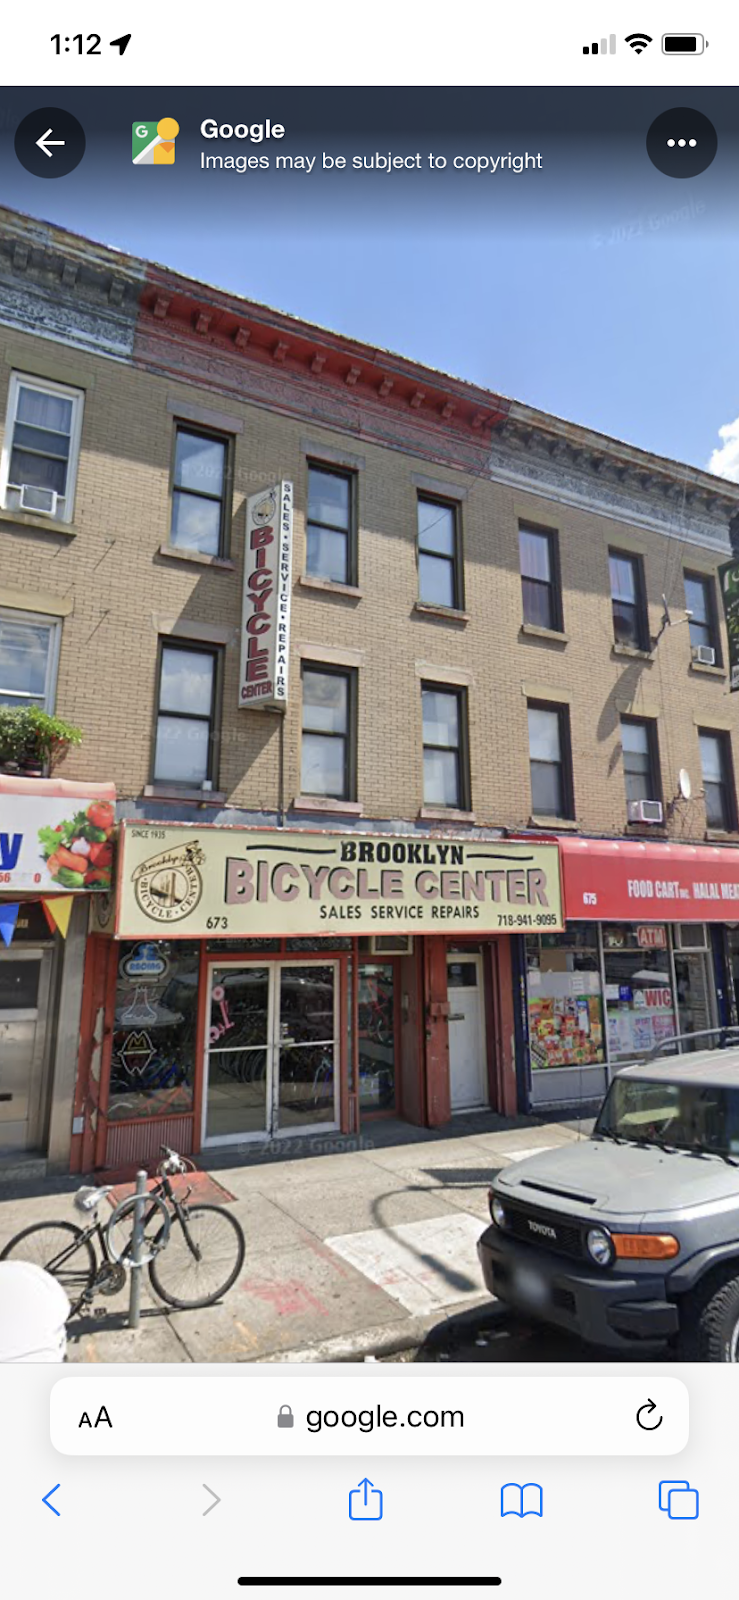 Brooklyn Bicycle Center | 673 Coney Island Ave, Brooklyn, NY 11218 | Phone: (718) 941-9095